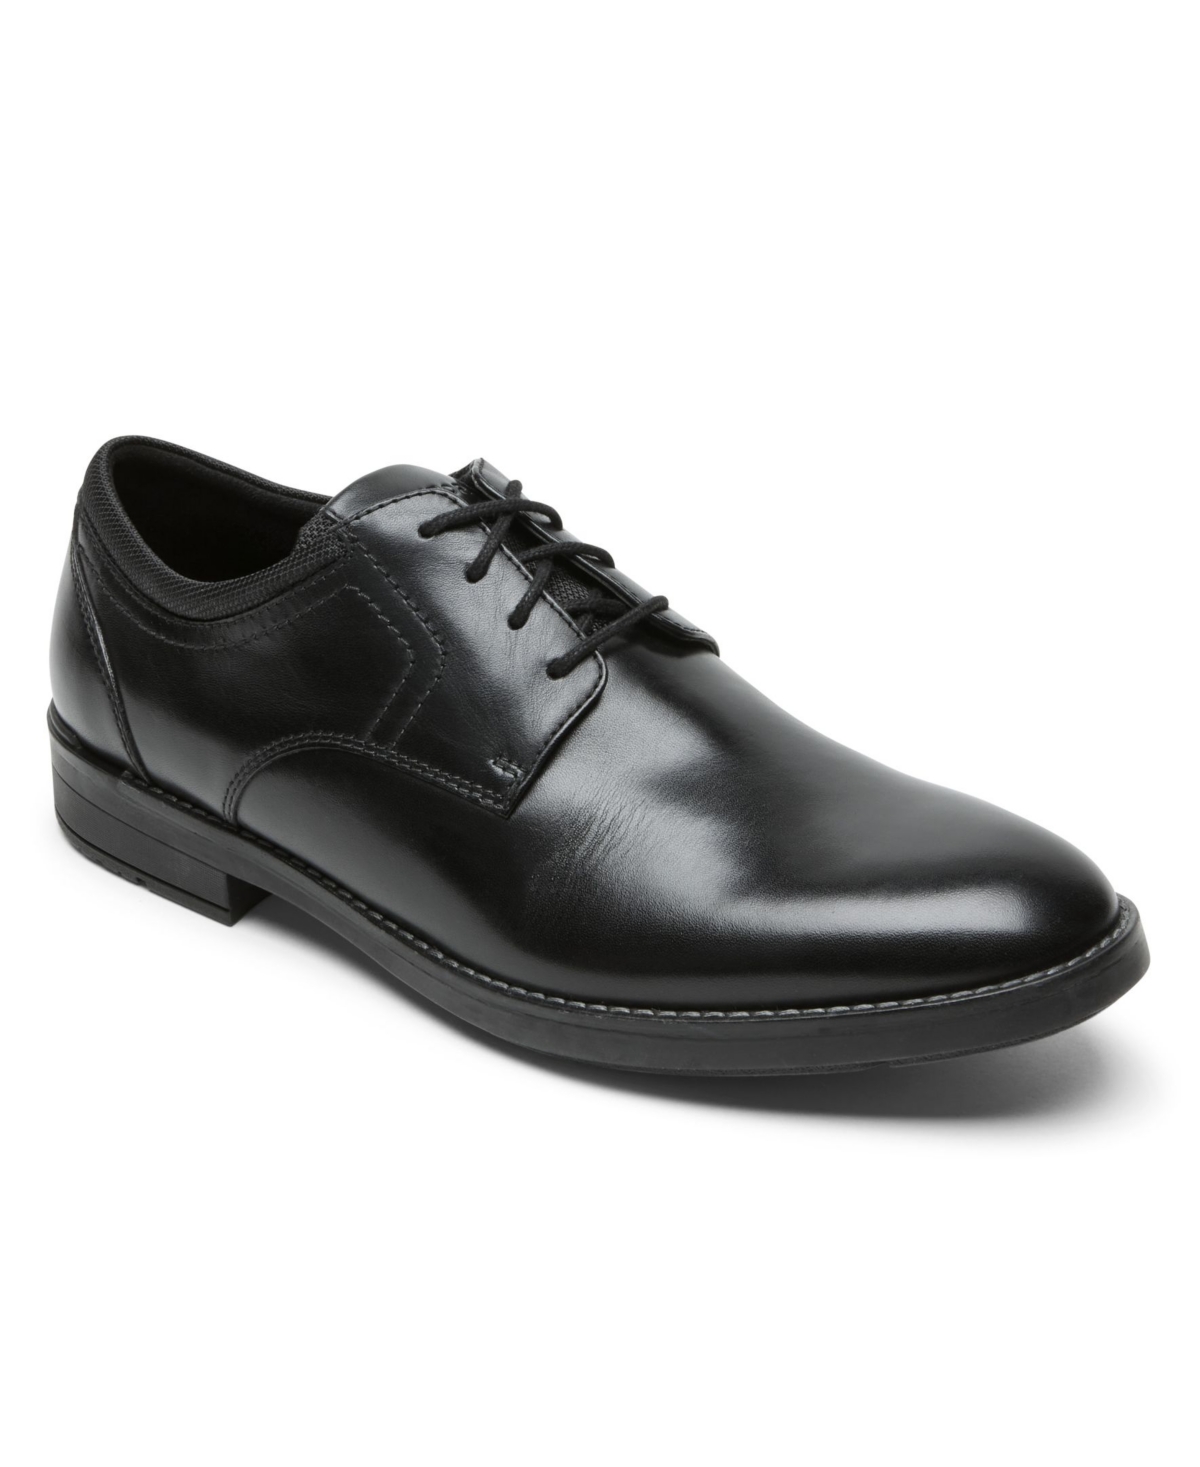 Men's Bryant Plain Toe Shoes - Black